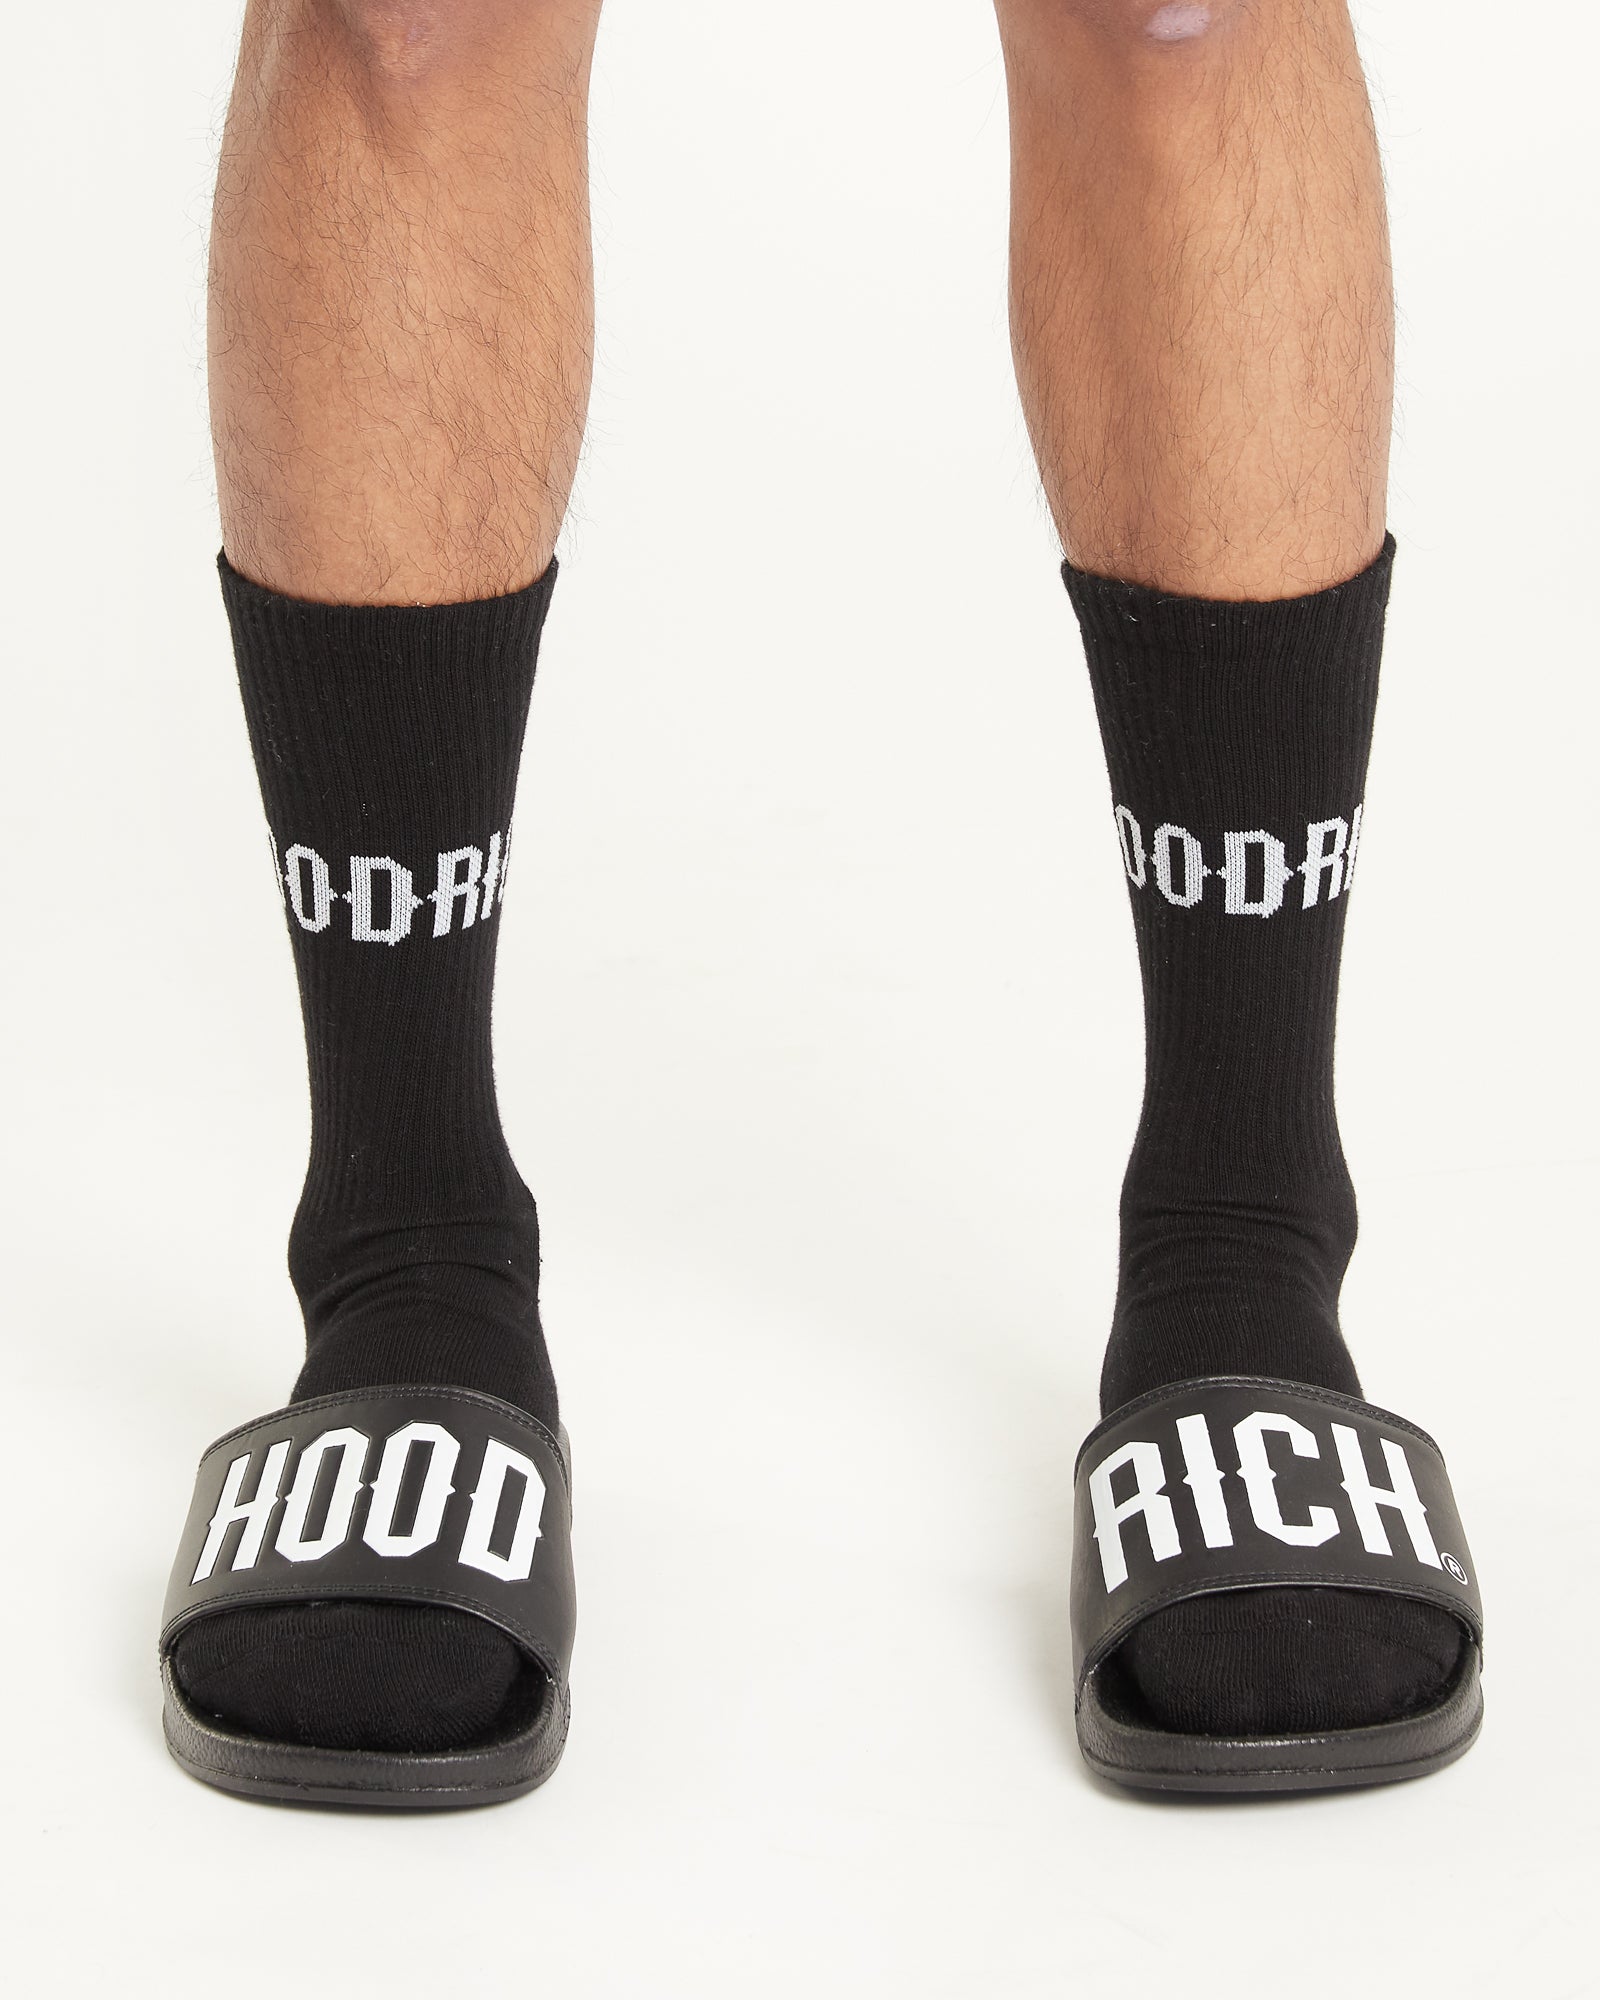 OG Core 3 Pack Socks - Black/White - Accessories - HOODRICH LIFESTYLE